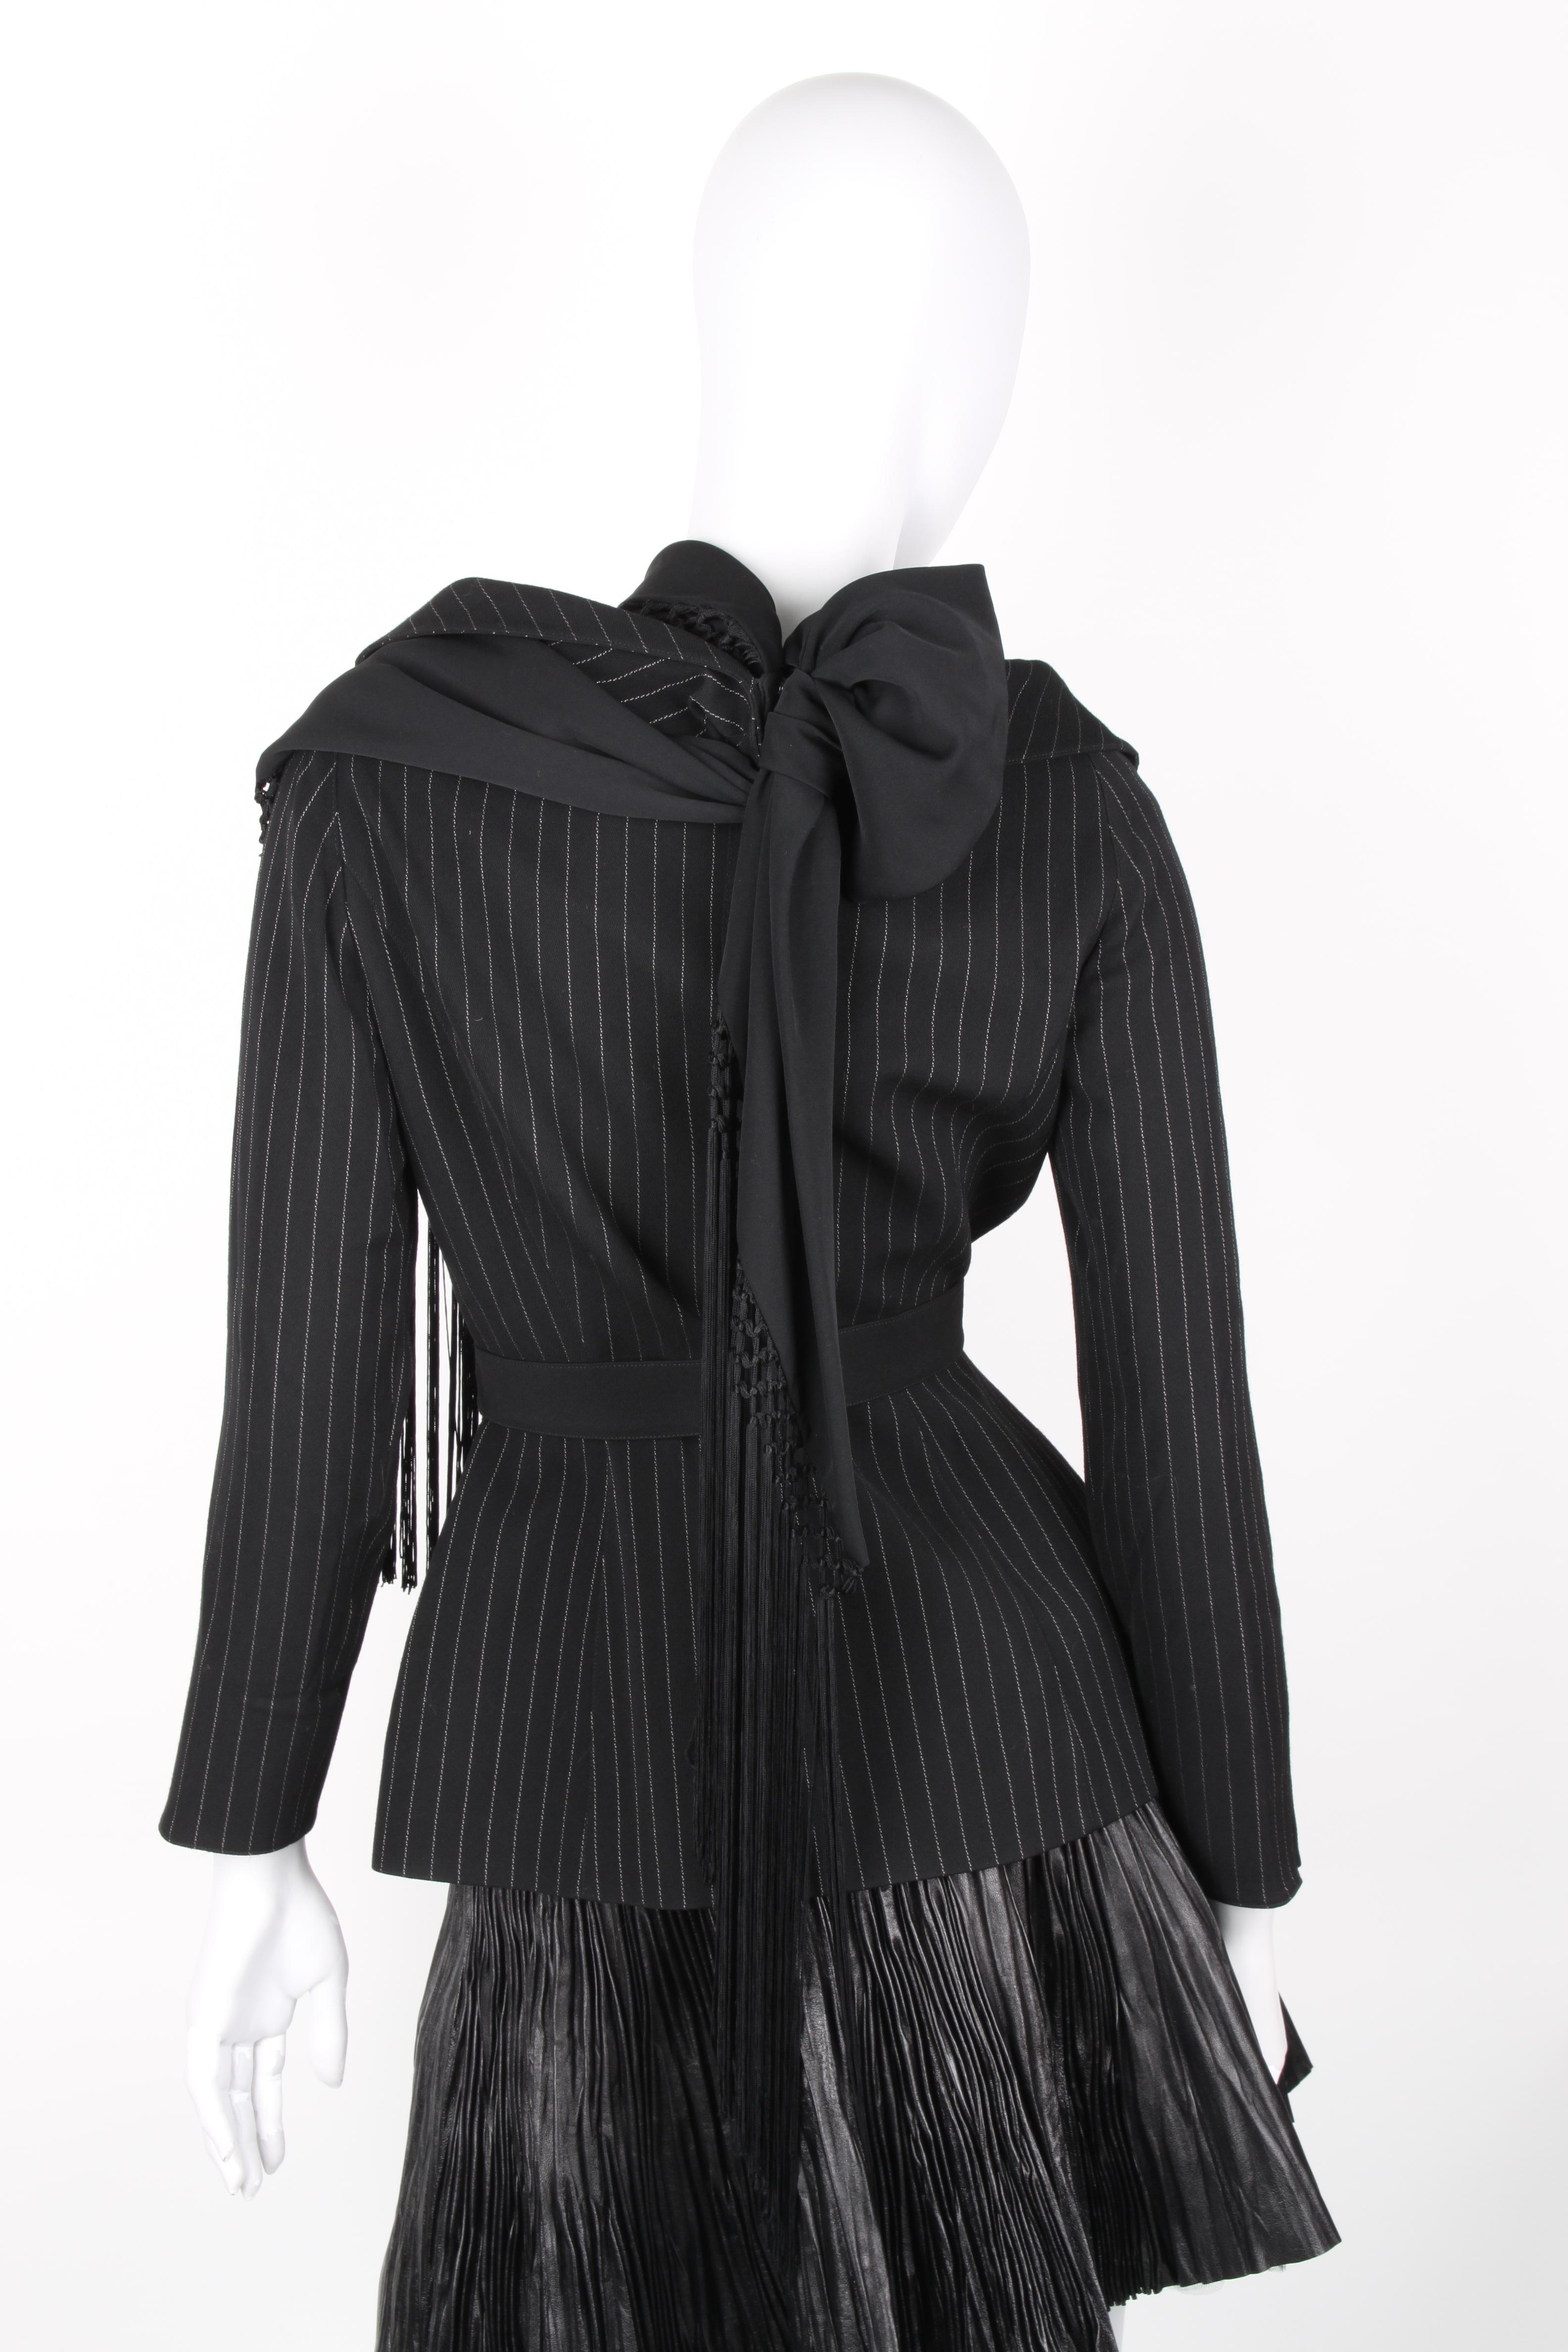 Thierry Mugler pinstripe jacket with asymmetric silk tassle shawl For Sale 1